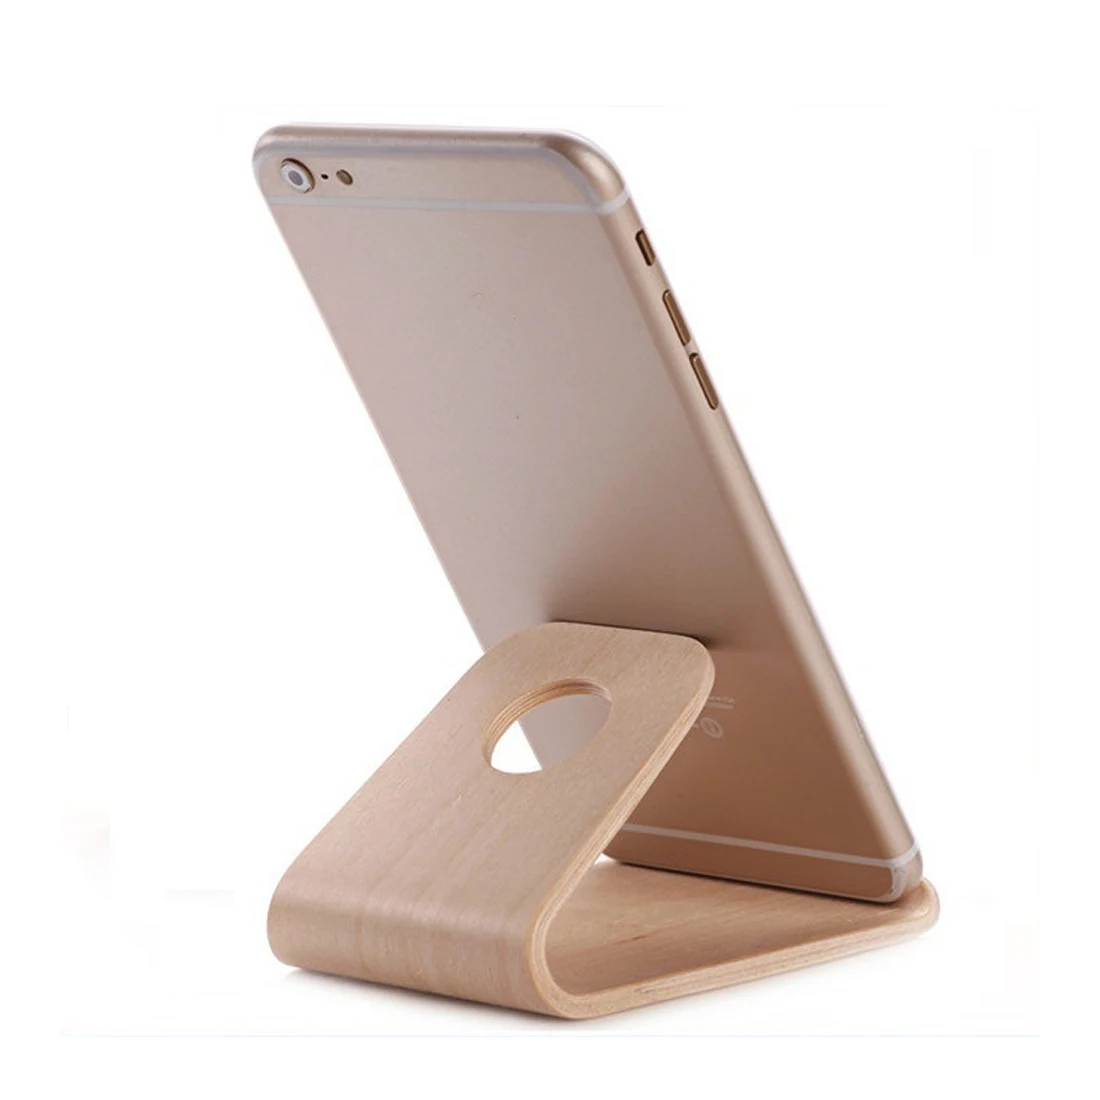 

Etmakit New Birch/Walnut Lightweight Slim Design Wooden Mobile Phone Stand Holder for iPhone X 8 7 Plus Samsung Galaxy S8 Note5